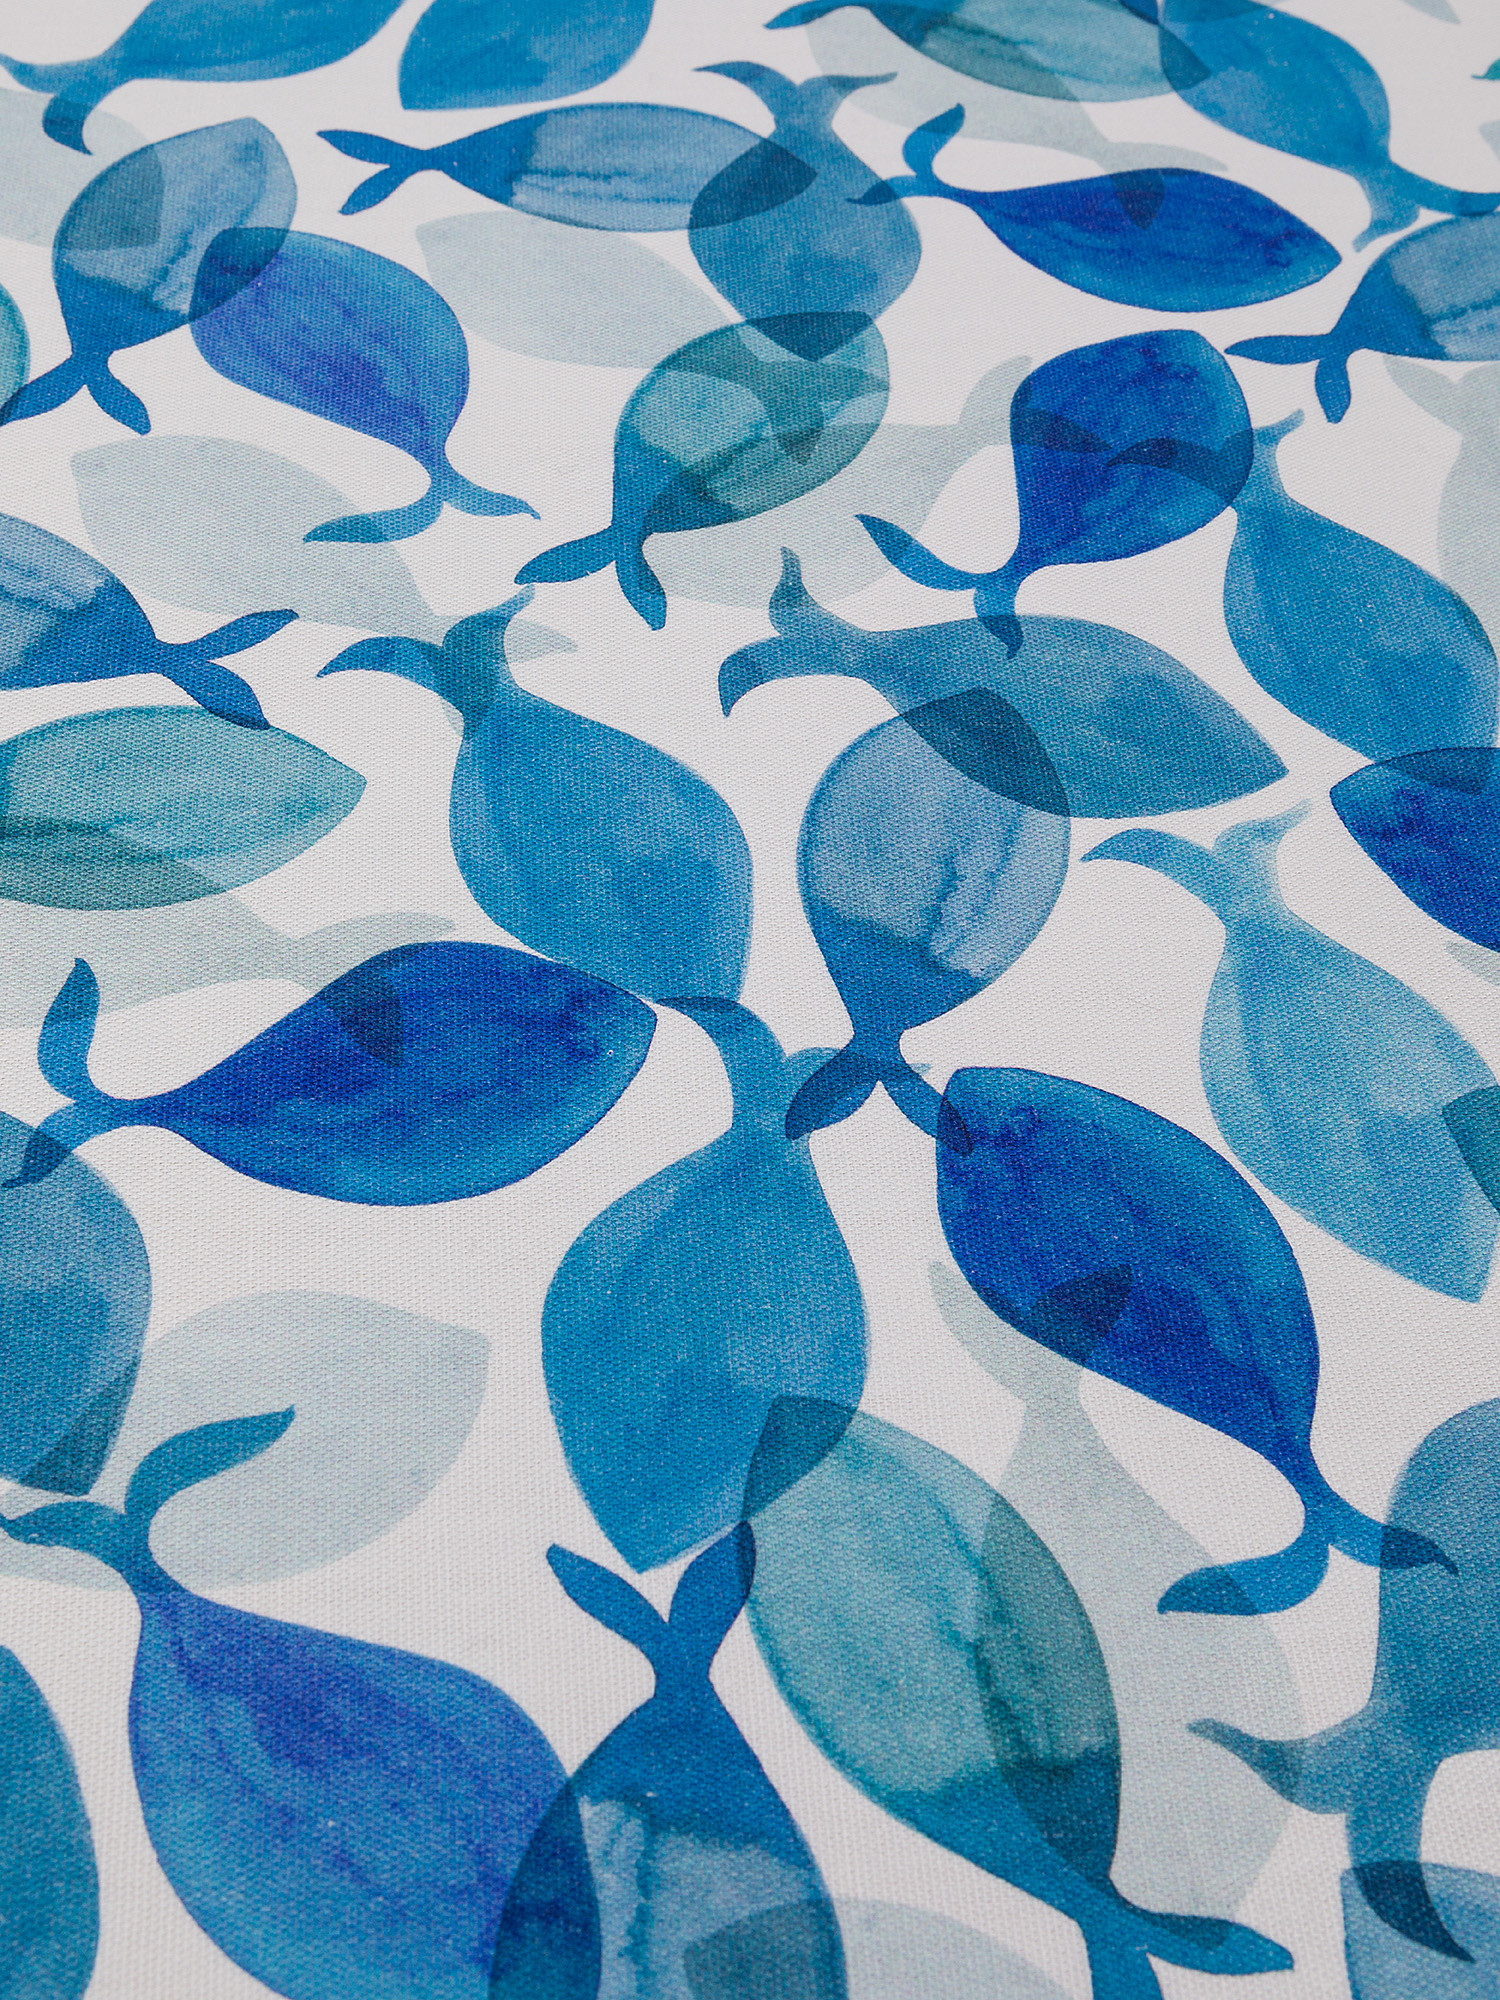 Tovaglia rotonda puro cotone stampa pesci, Blu, large image number 1